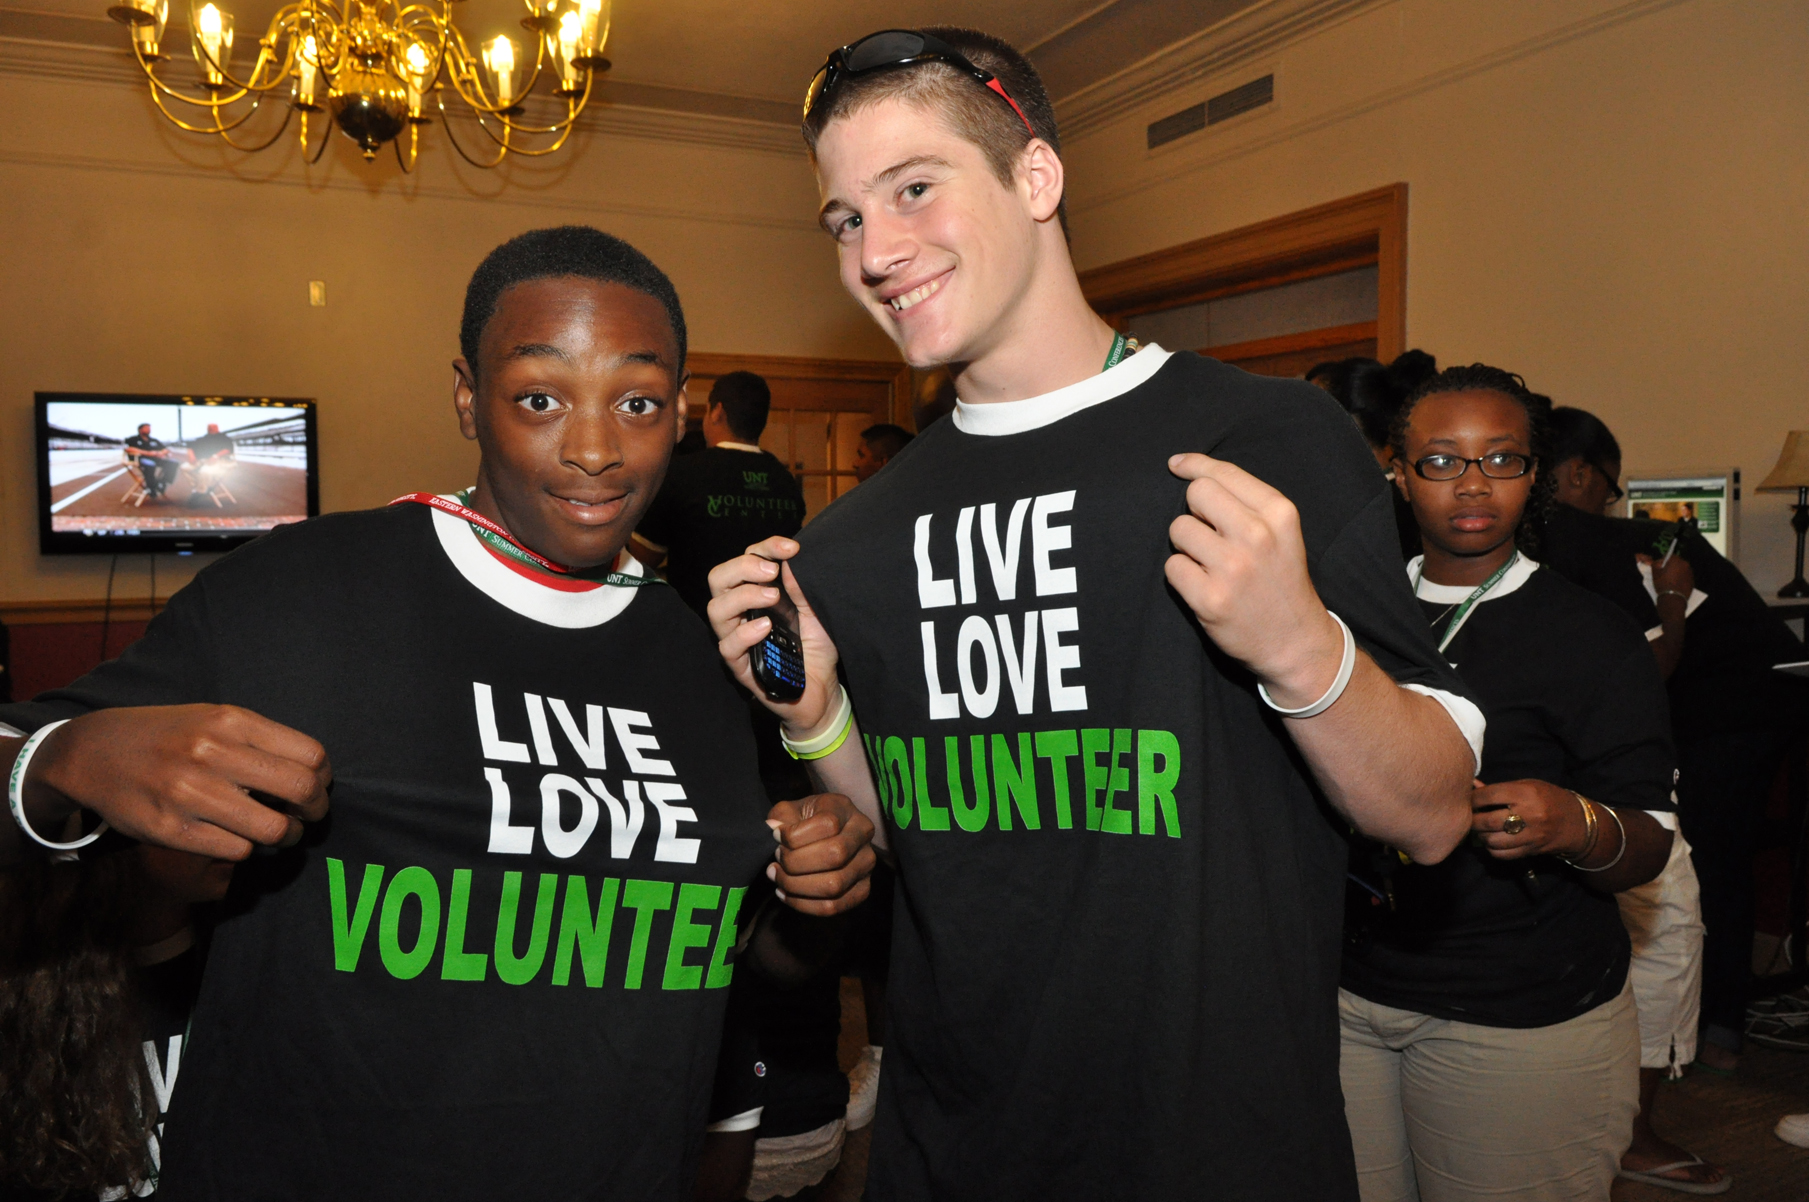 IHDF participants wear t-shirts lauding volunteerism